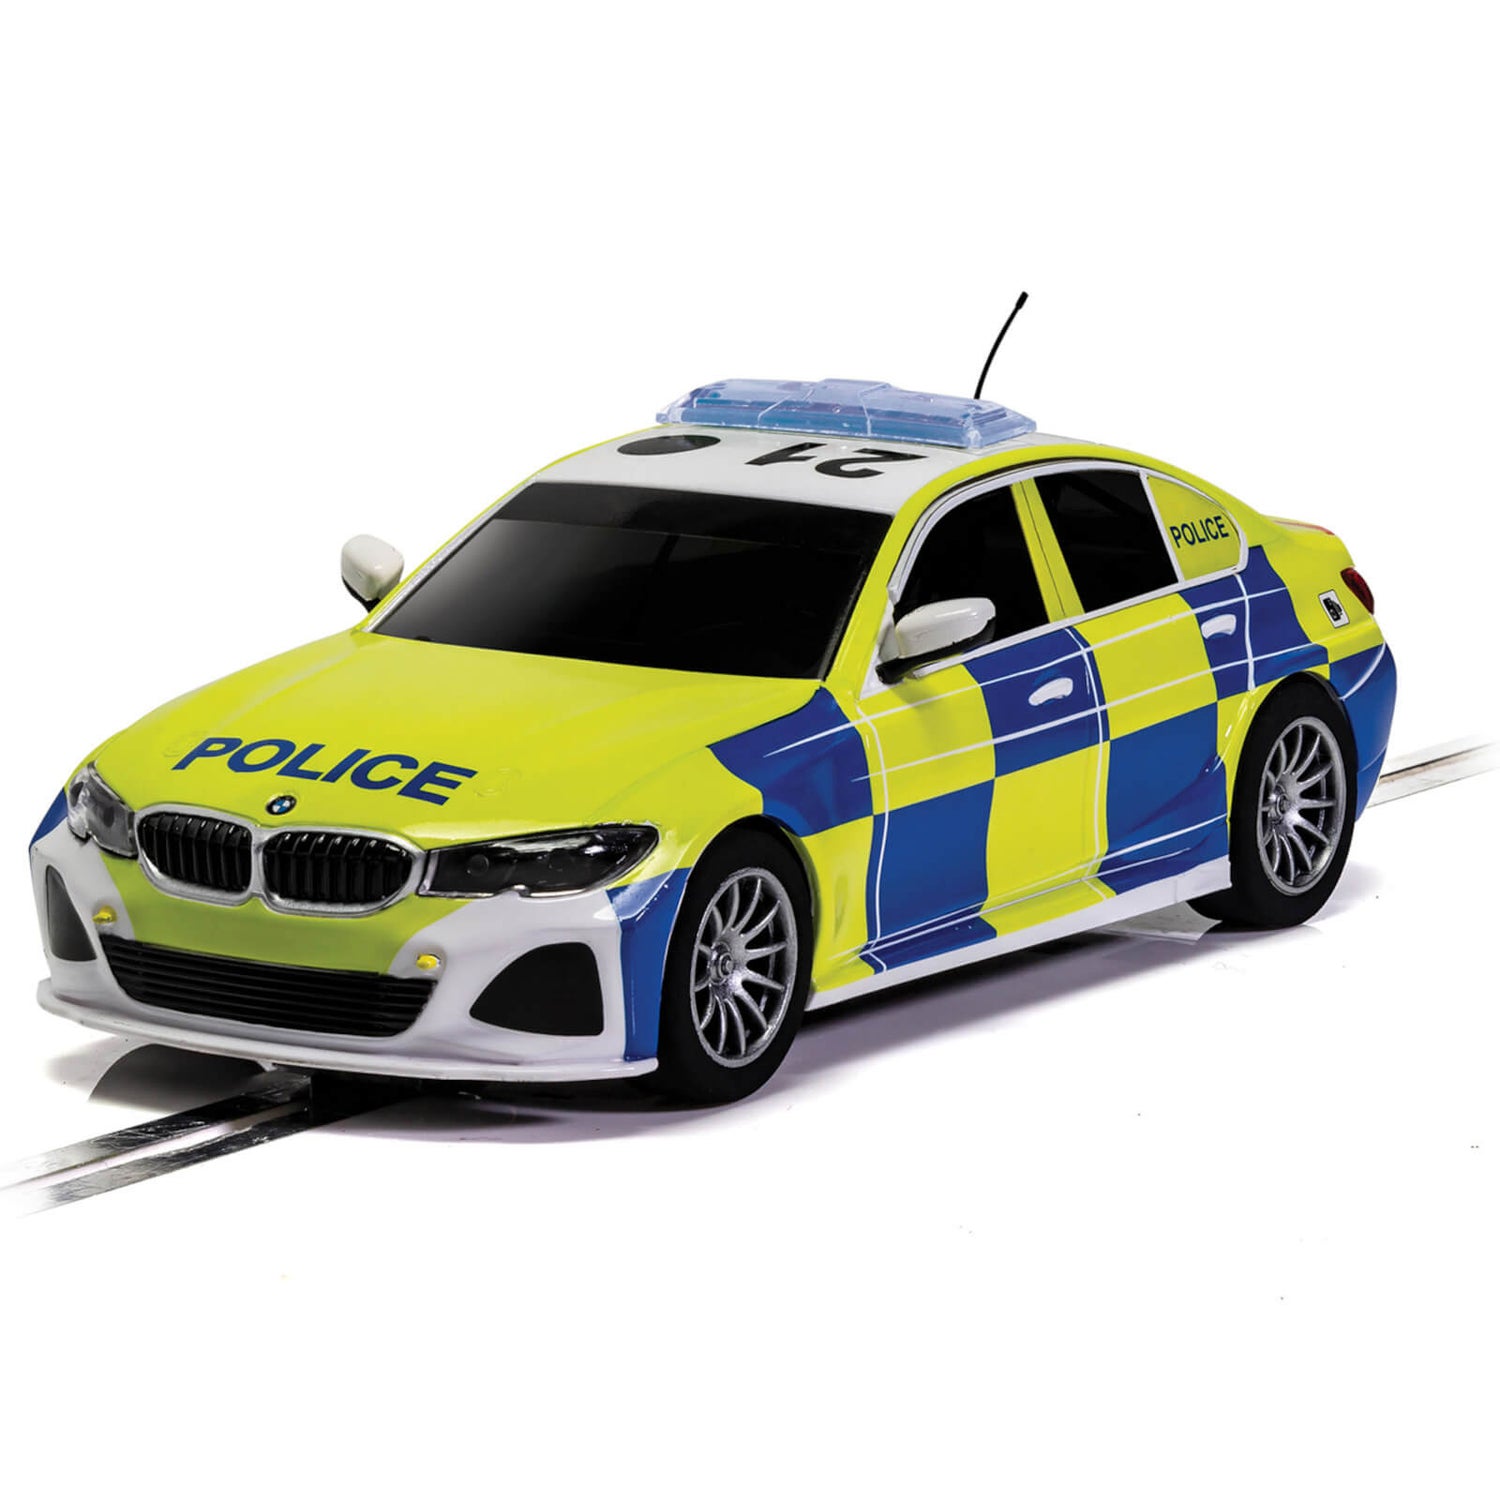 BMW 330i M-Sport - Police Car (1:32 Scale Slot car)